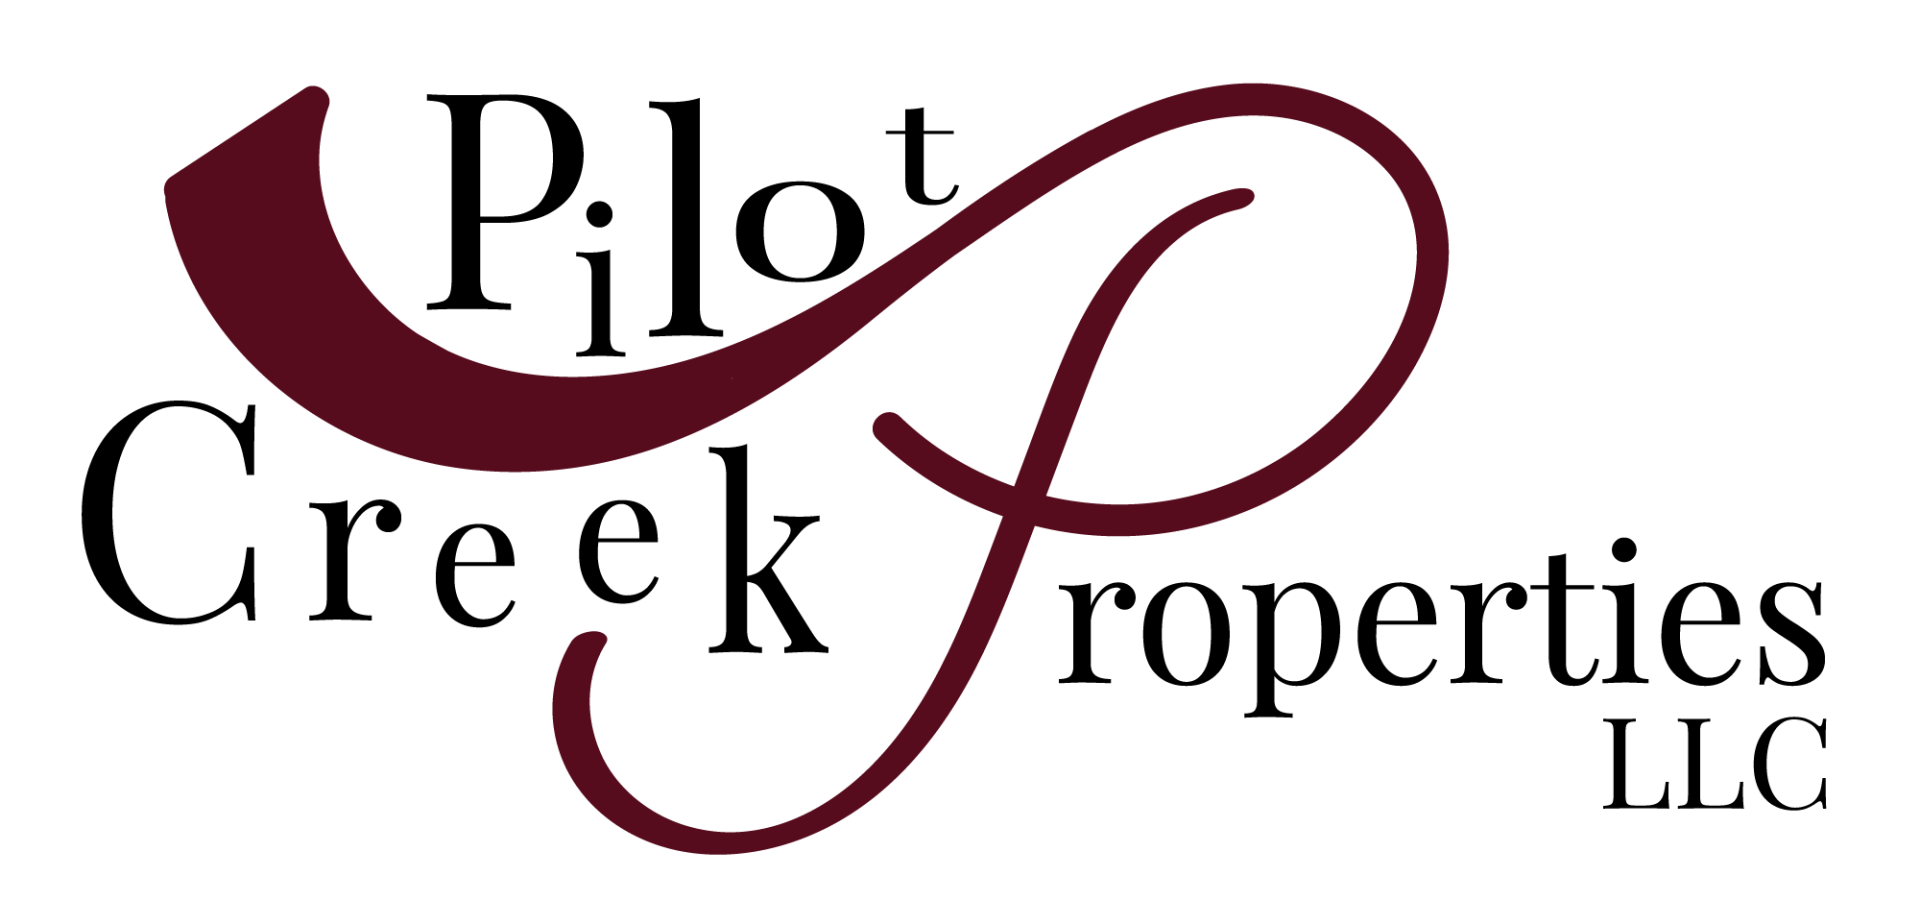 Pilot Creek Properties company logo